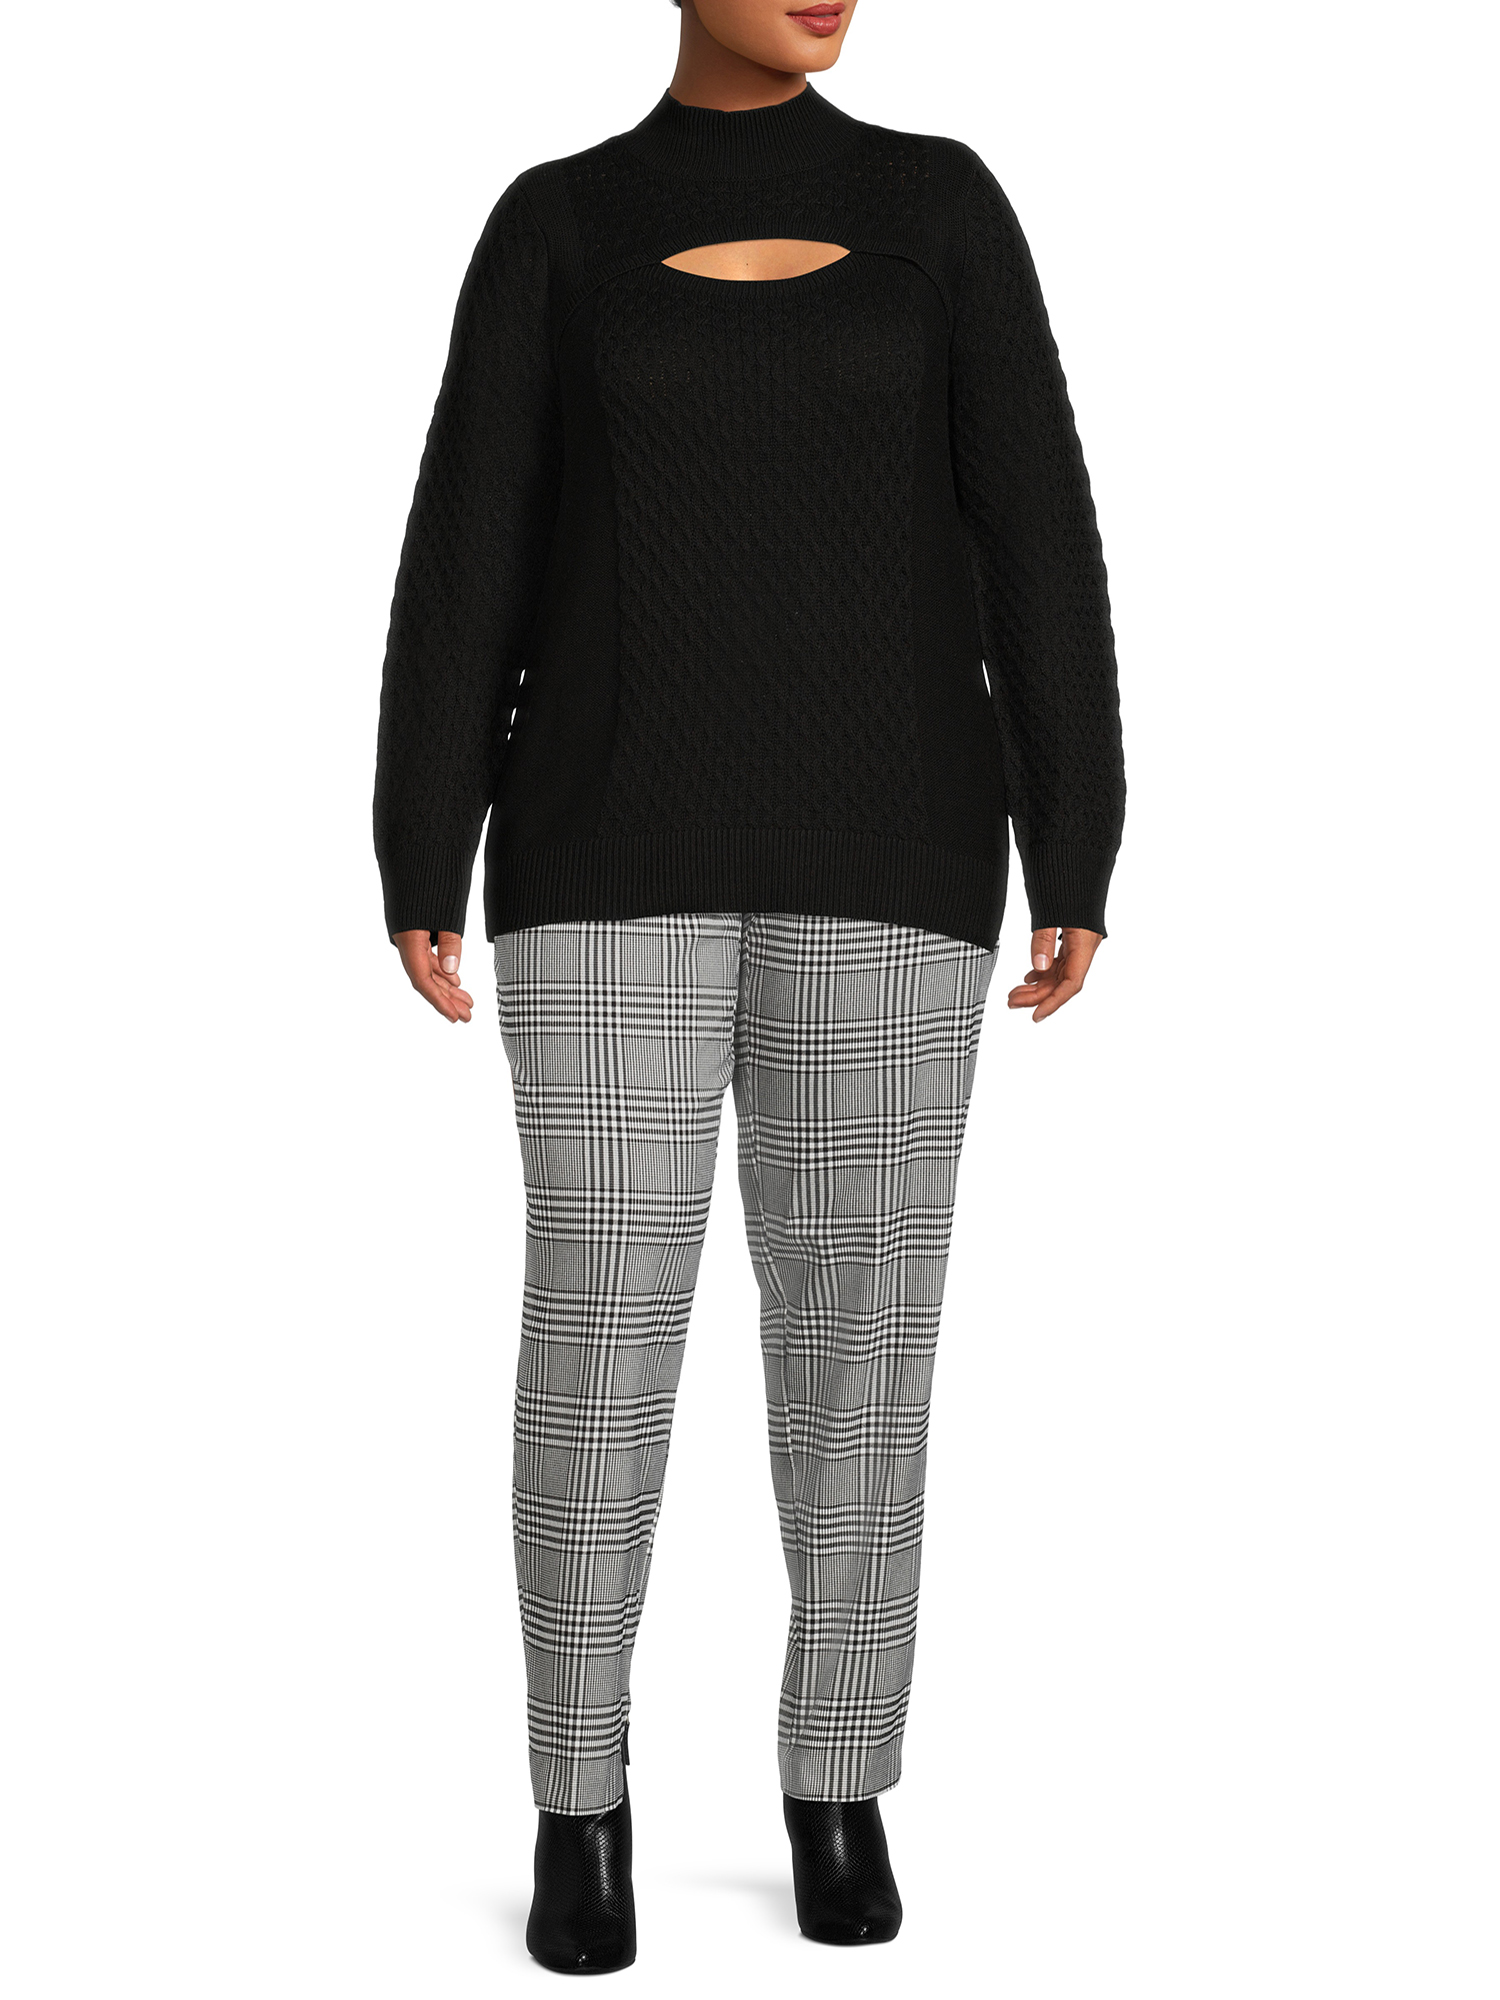 Terra & Sky Women's Cutout Pullover Sweater - image 2 of 5